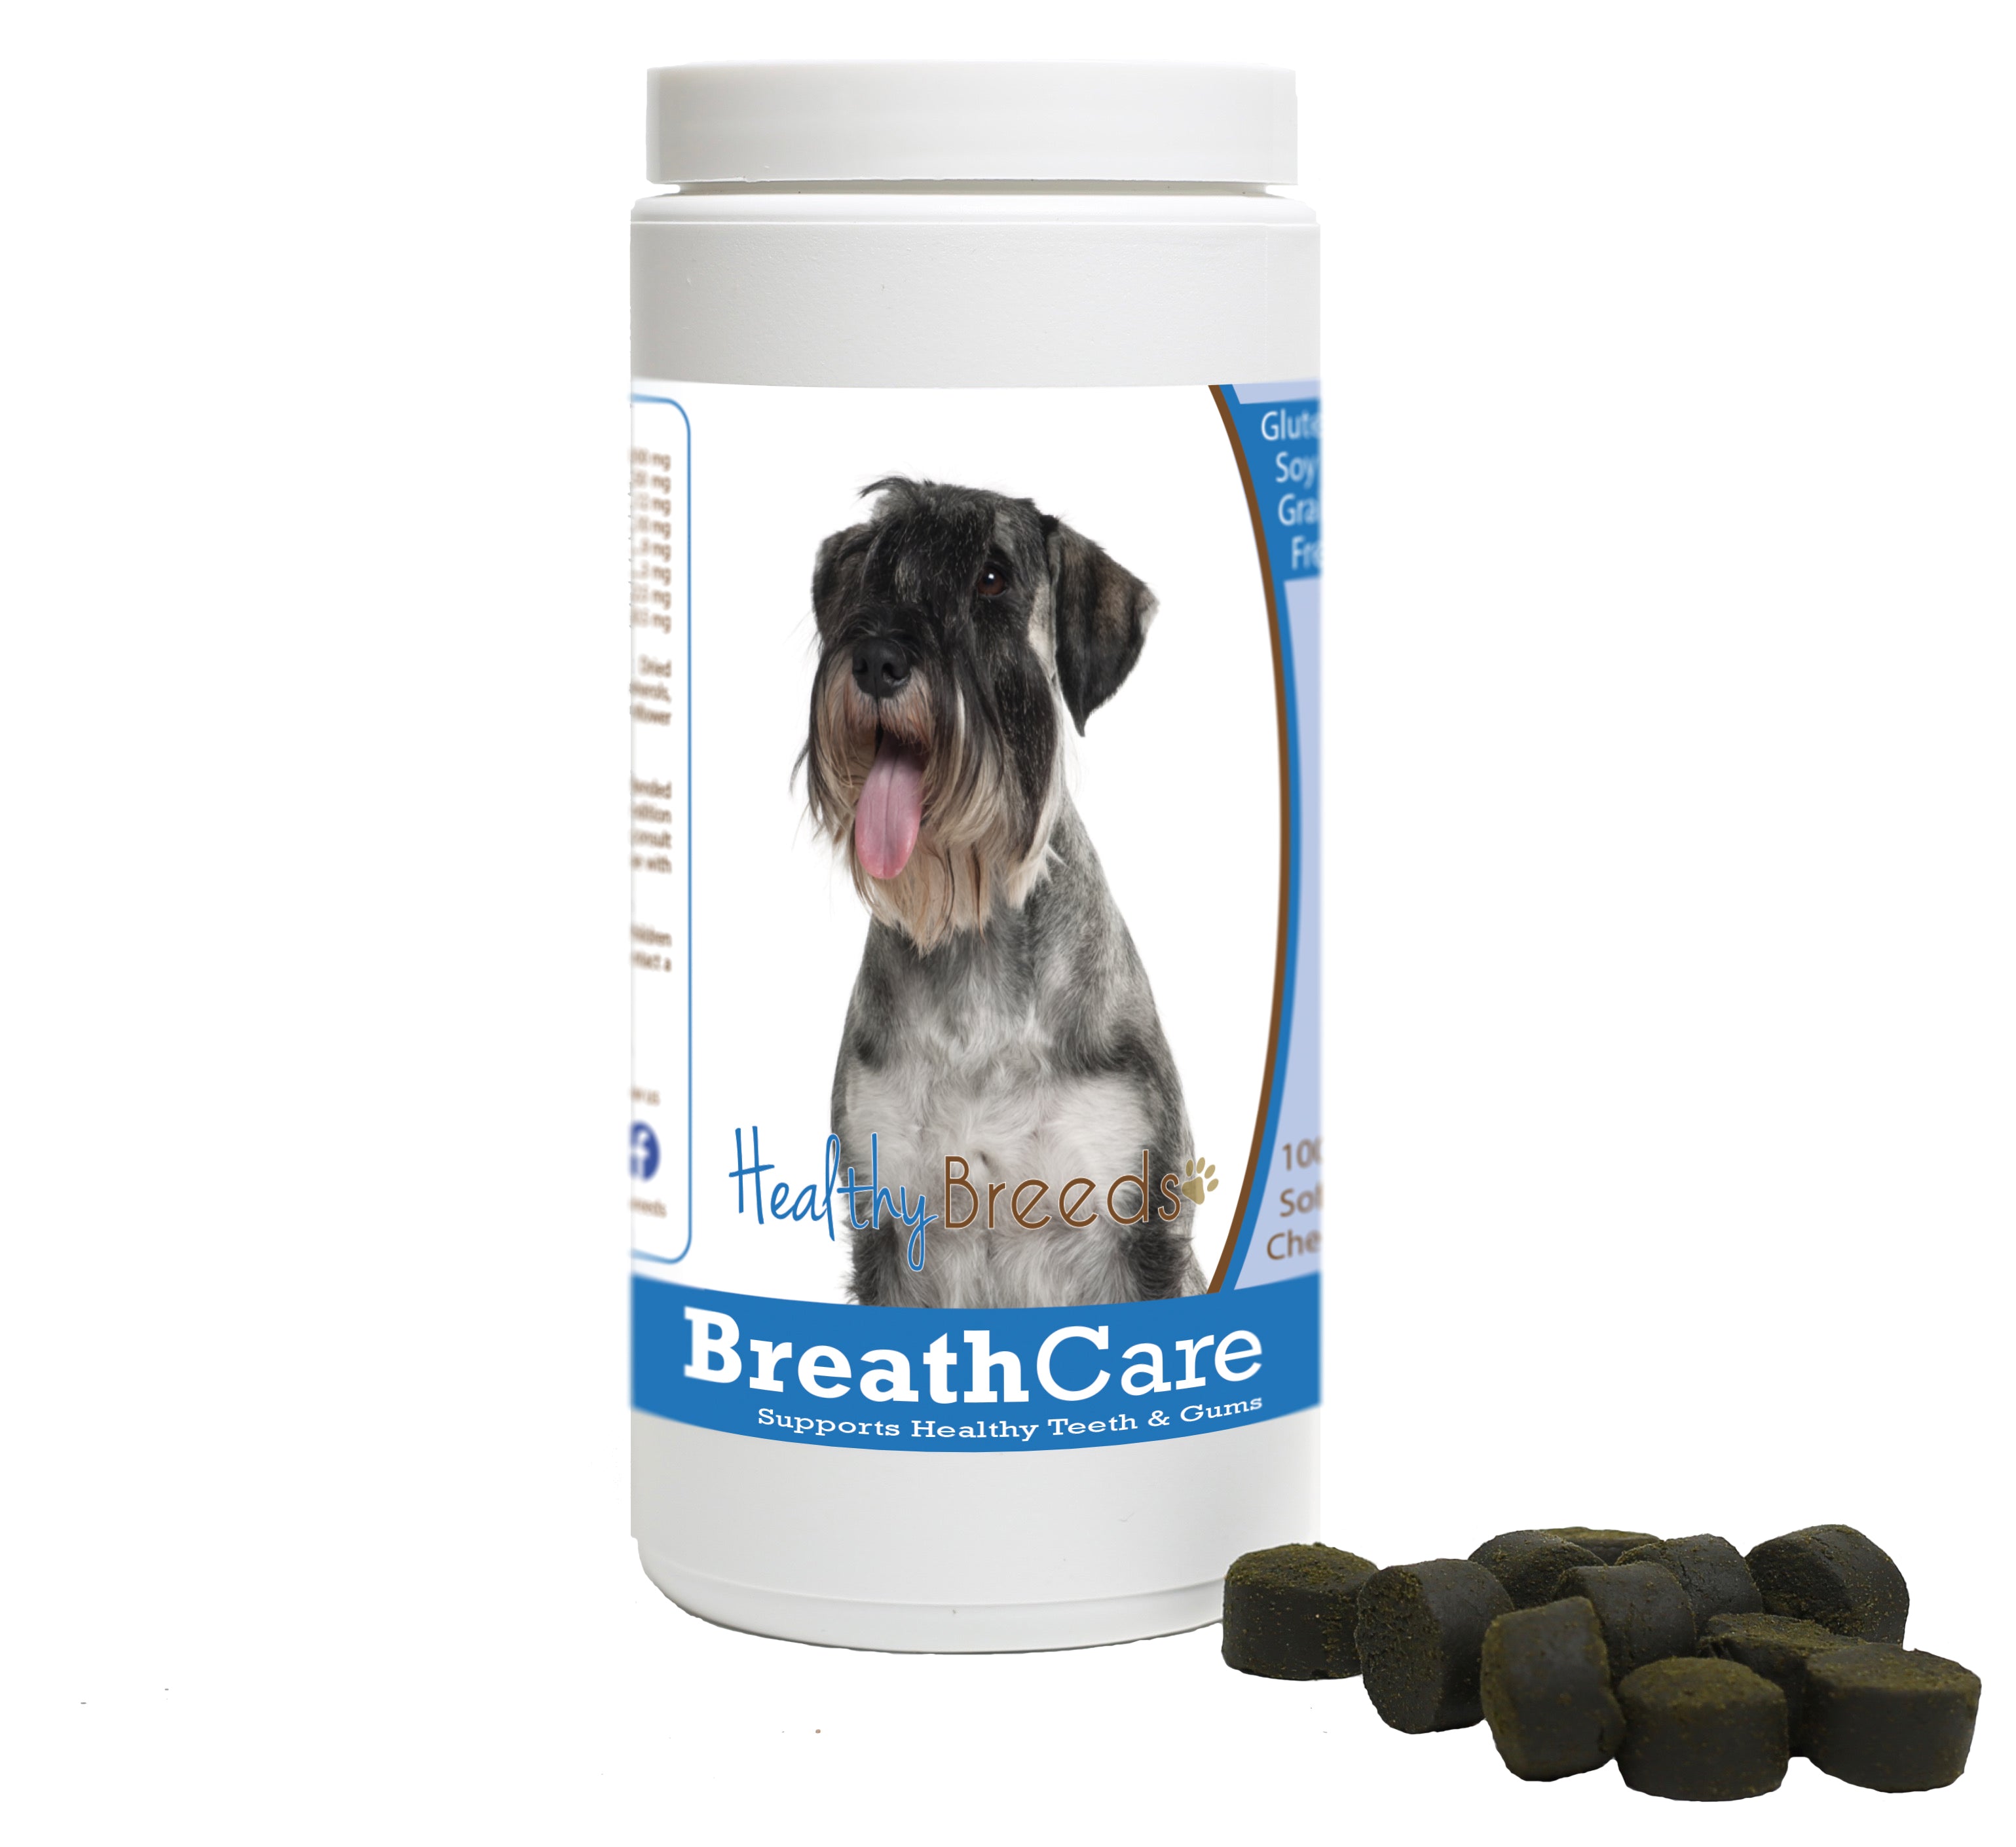 Standard Schnauzer Breath Care Soft Chews for Dogs 100 Count